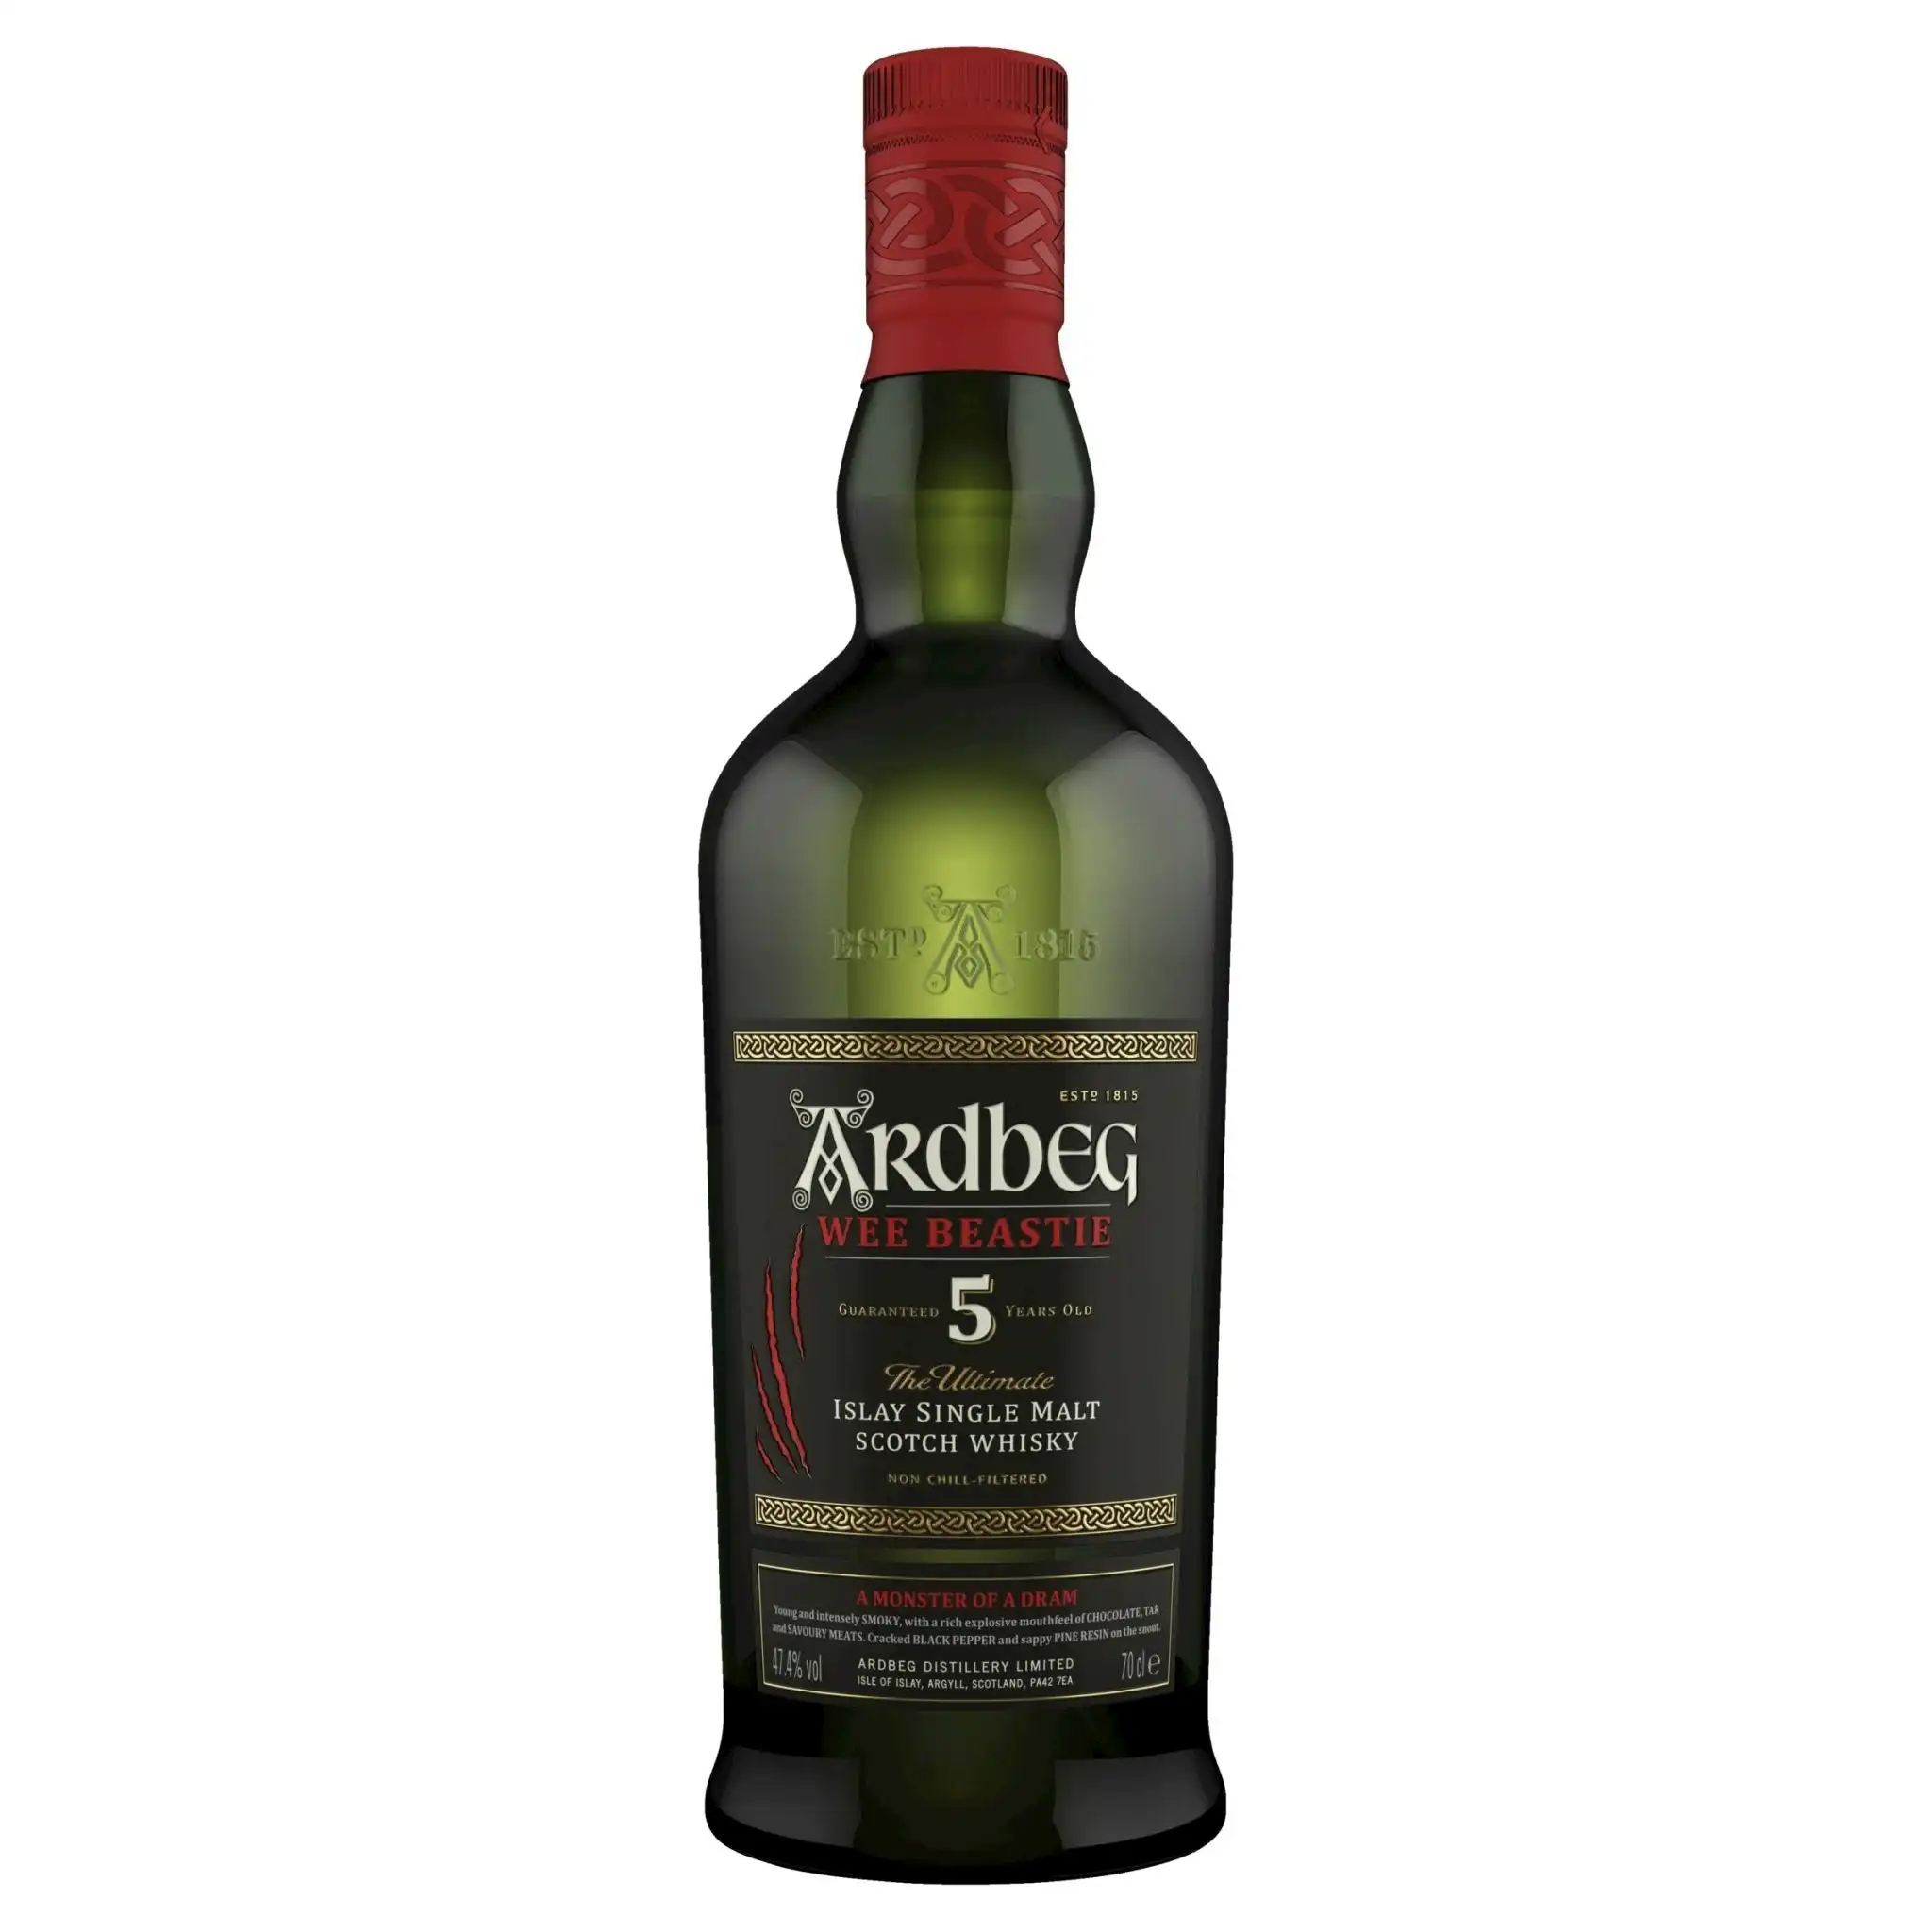 Ardbeg Wee Beastie Single Malt Scotch Whisky (700mL)